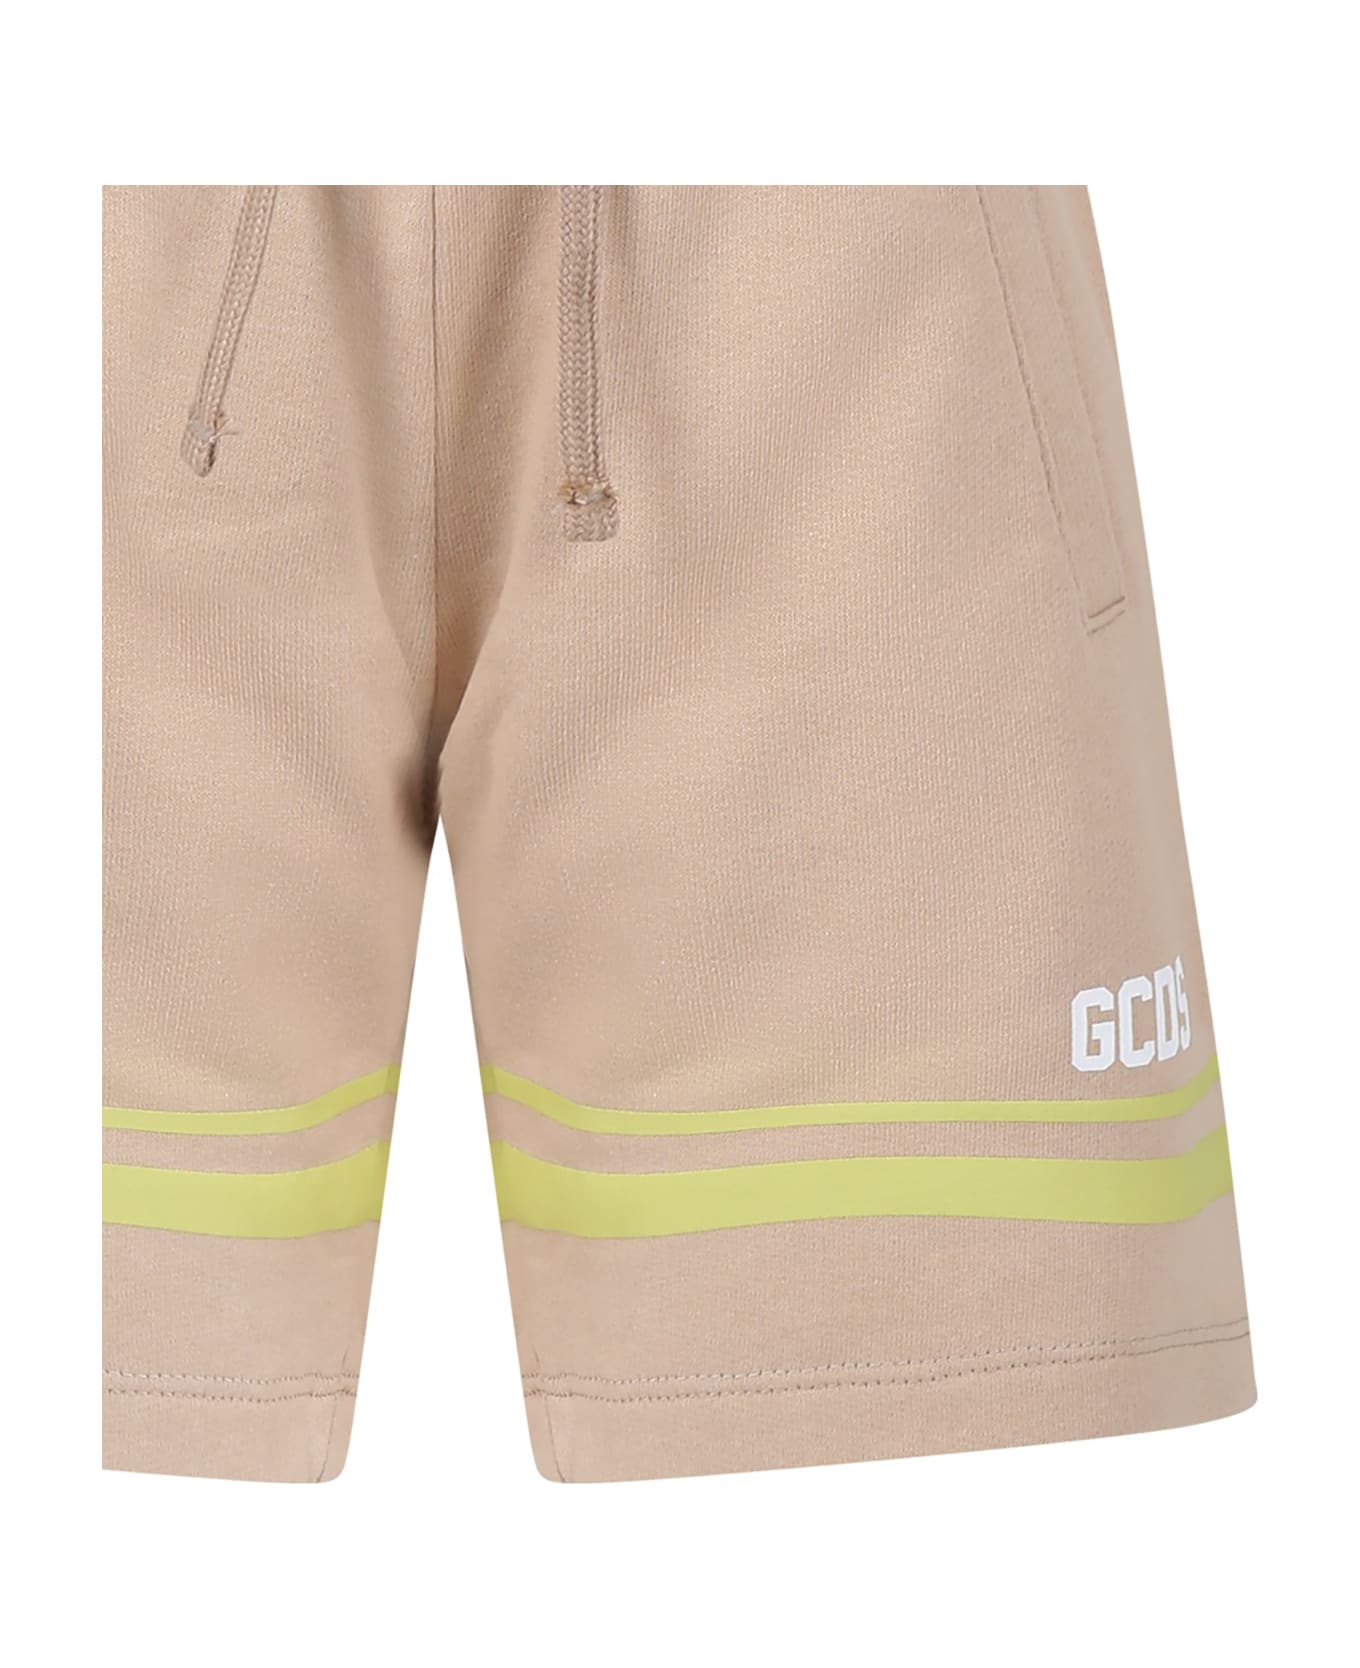 GCDS Mini Beigesports Shorts For Boy With Logo - Beige